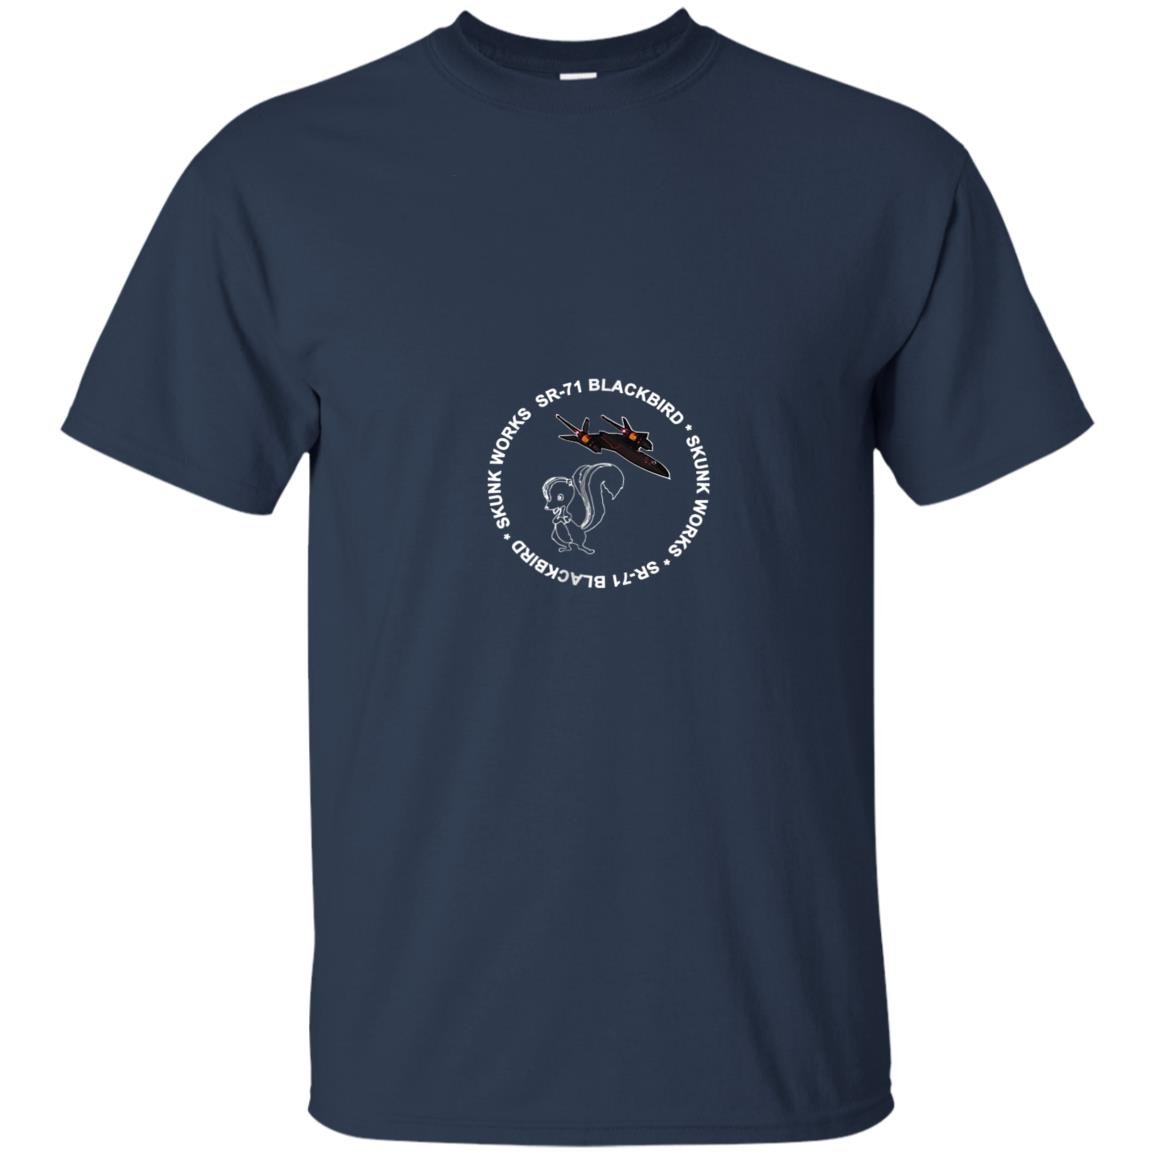 Sr 71 blackbird skunk works T-shirt